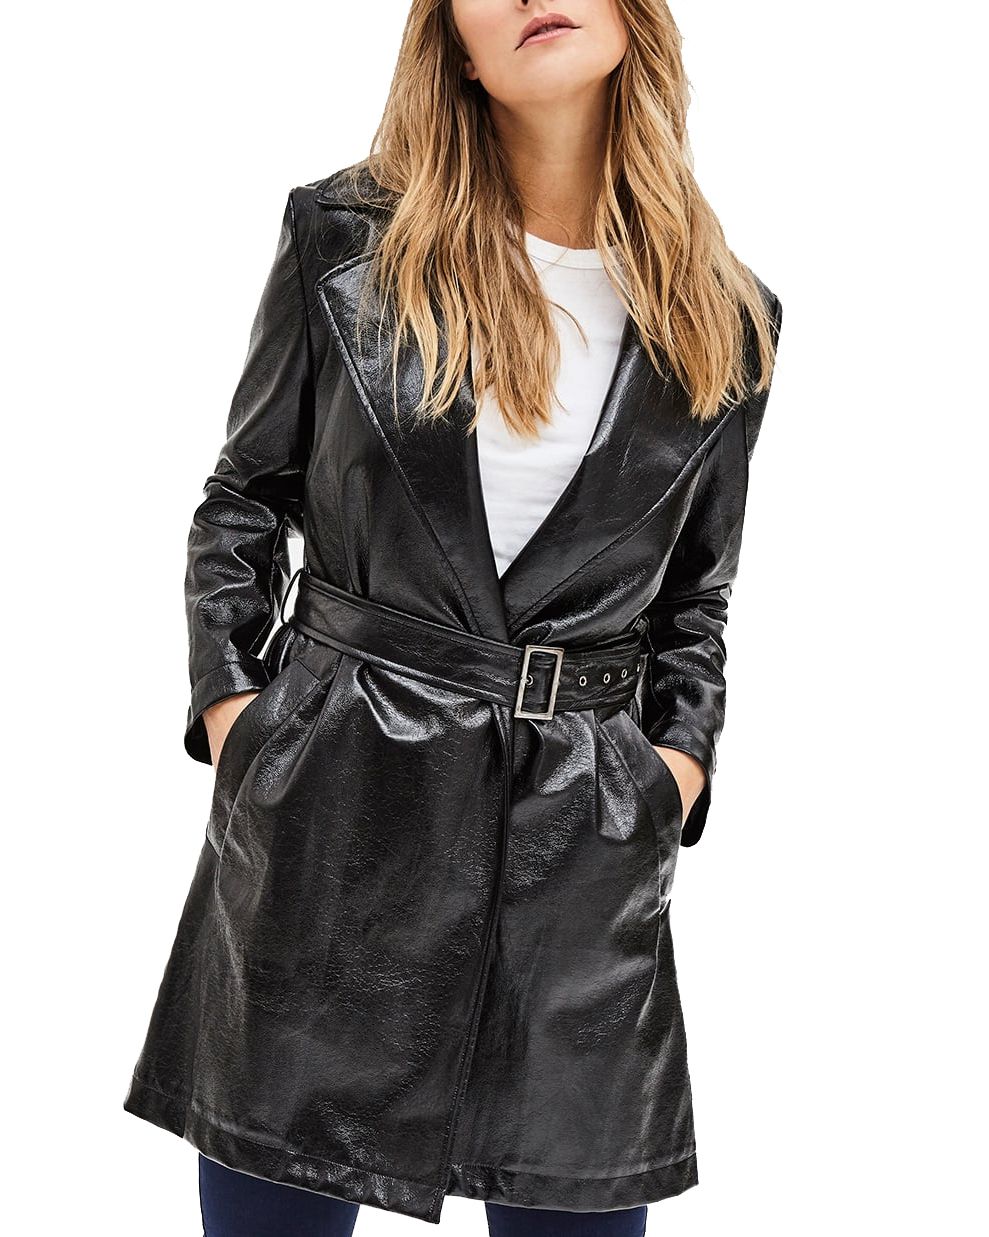 Patent Leather black coat